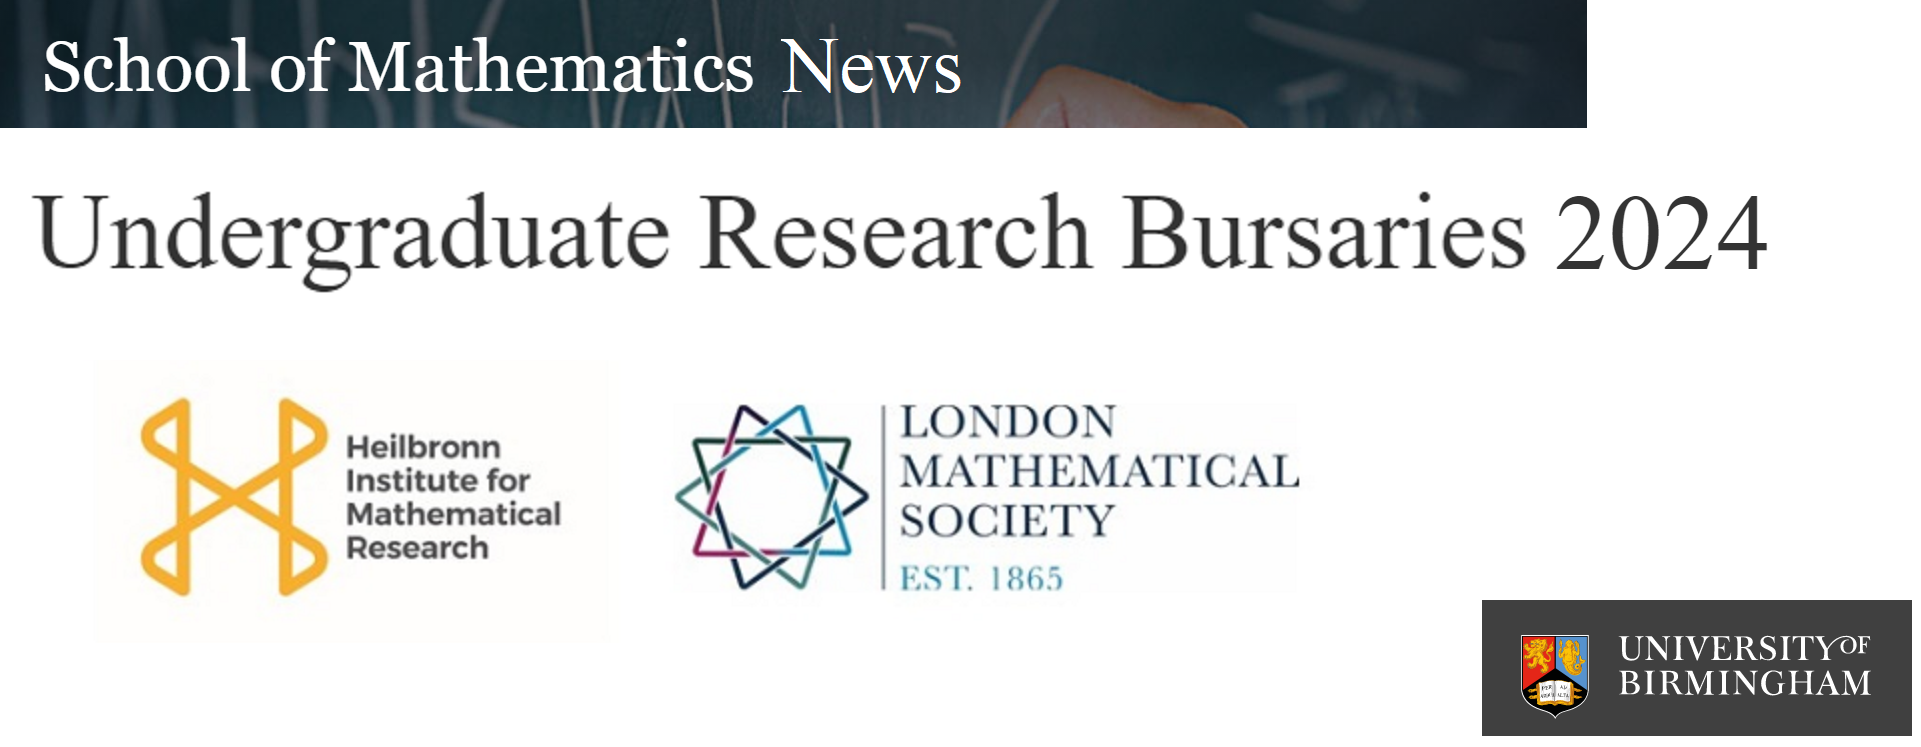 Undergraduate Research Bursaries 2024, with logos of London Mathematical Society and University of Birmingham